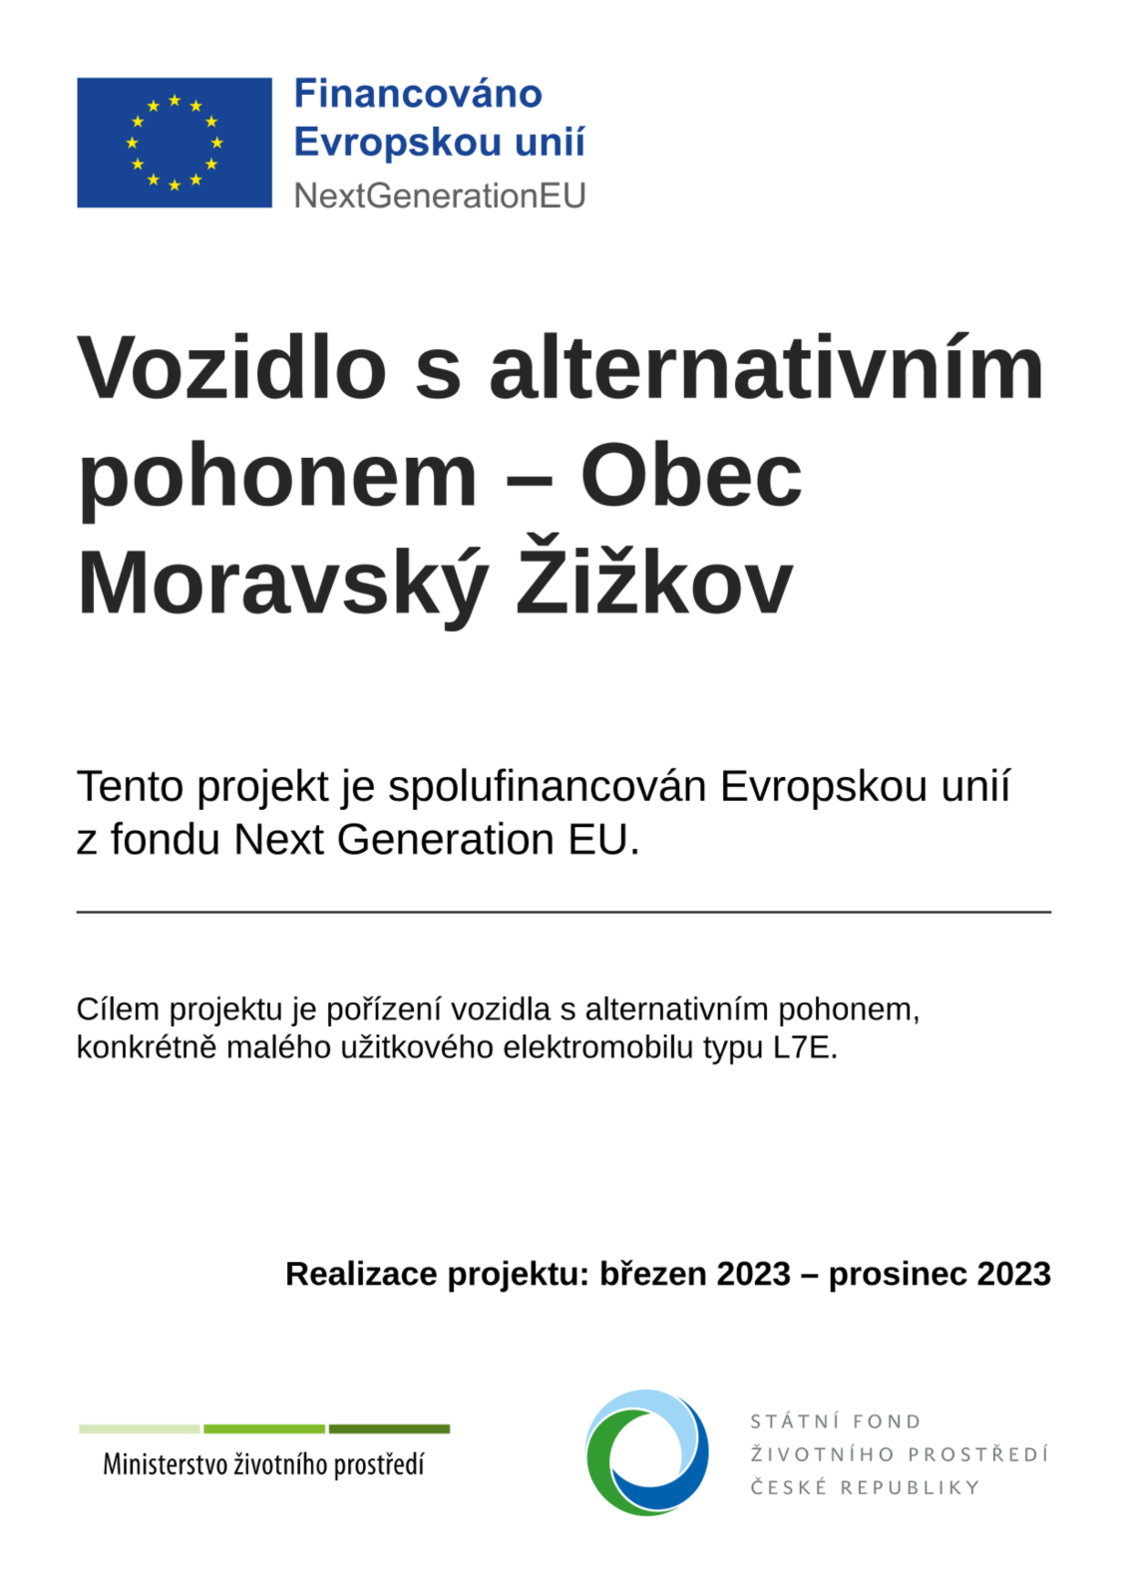 PlakátA3 - Moravský Žižkov_1.png